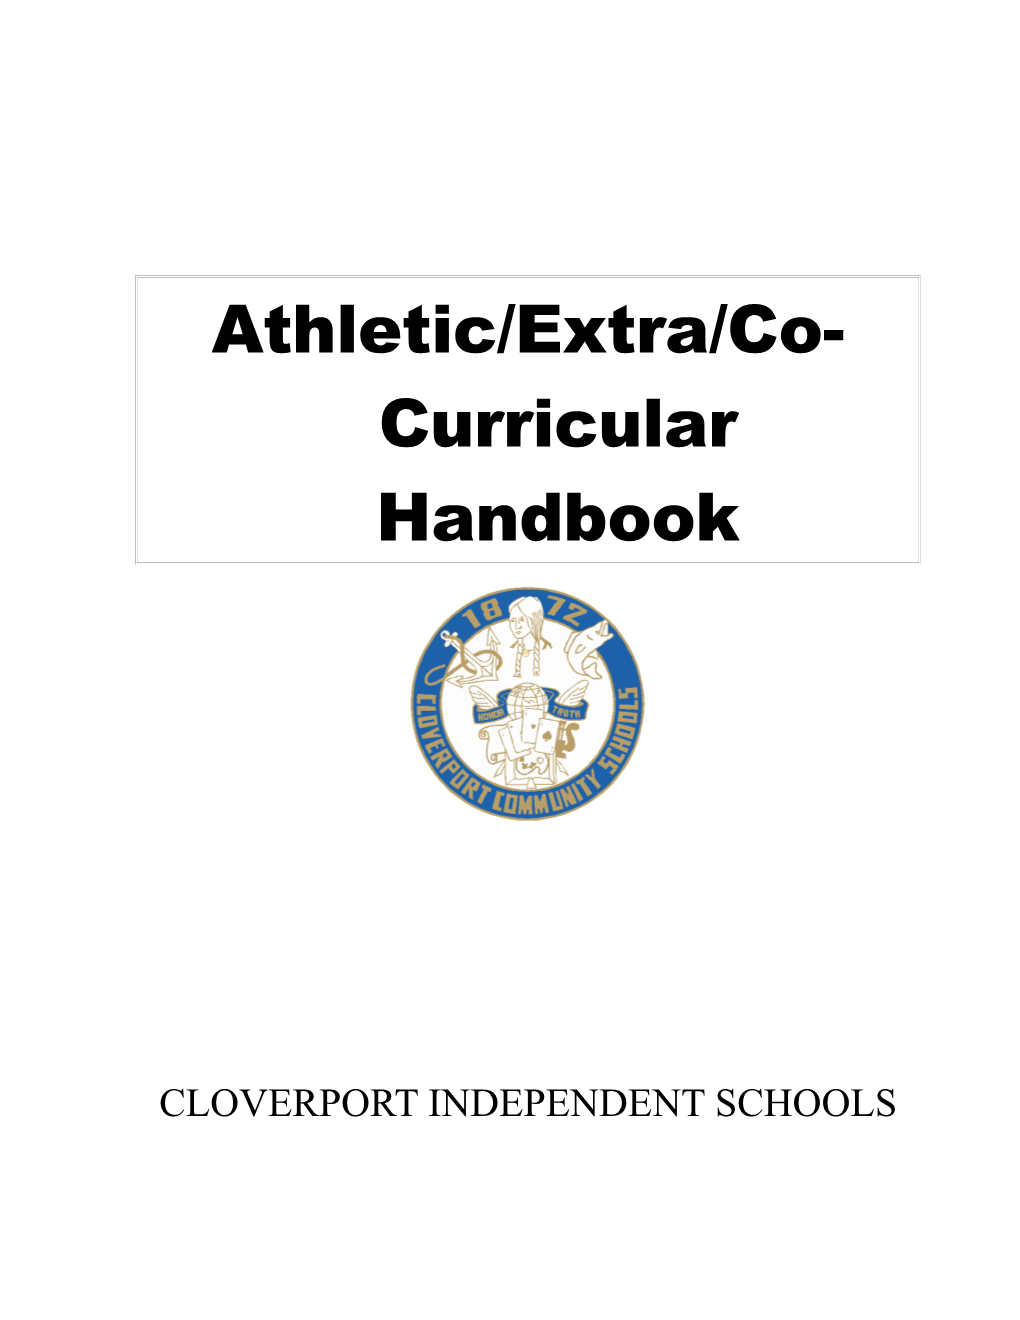 Athletic/Extra/Co-Curricularhandbook